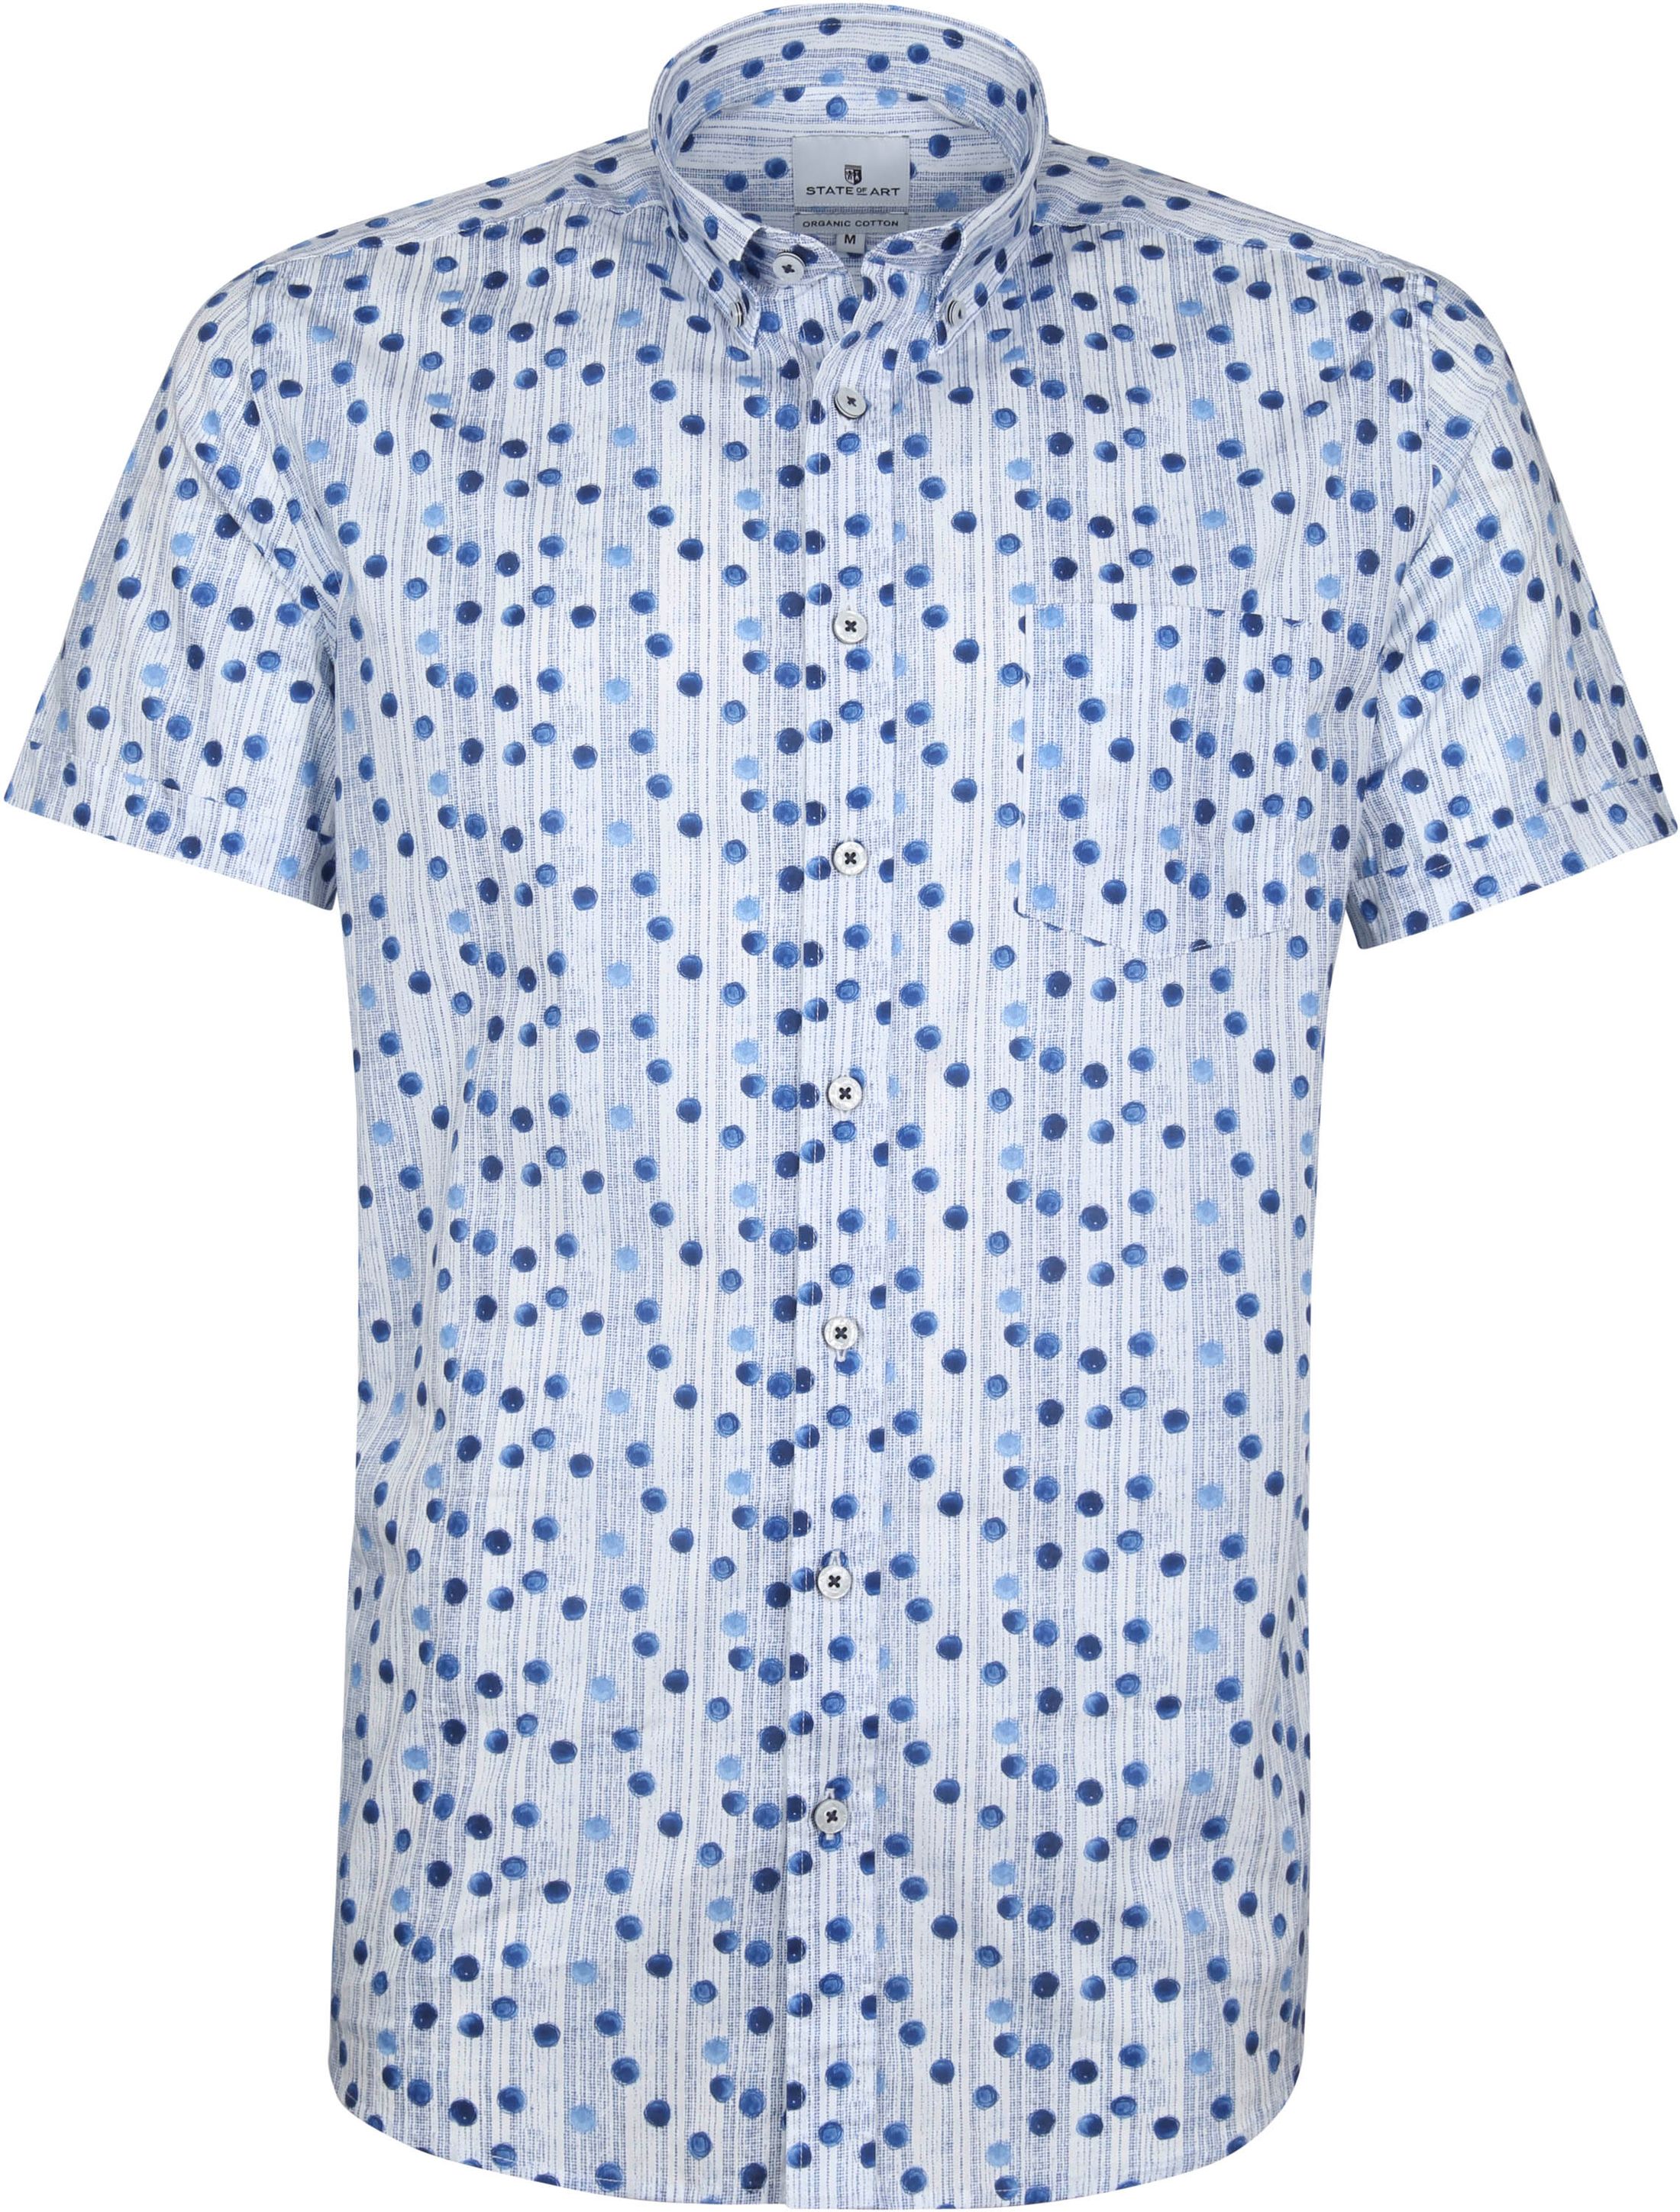 State Of Art Shortsleeve Shirt Dots Blue size L